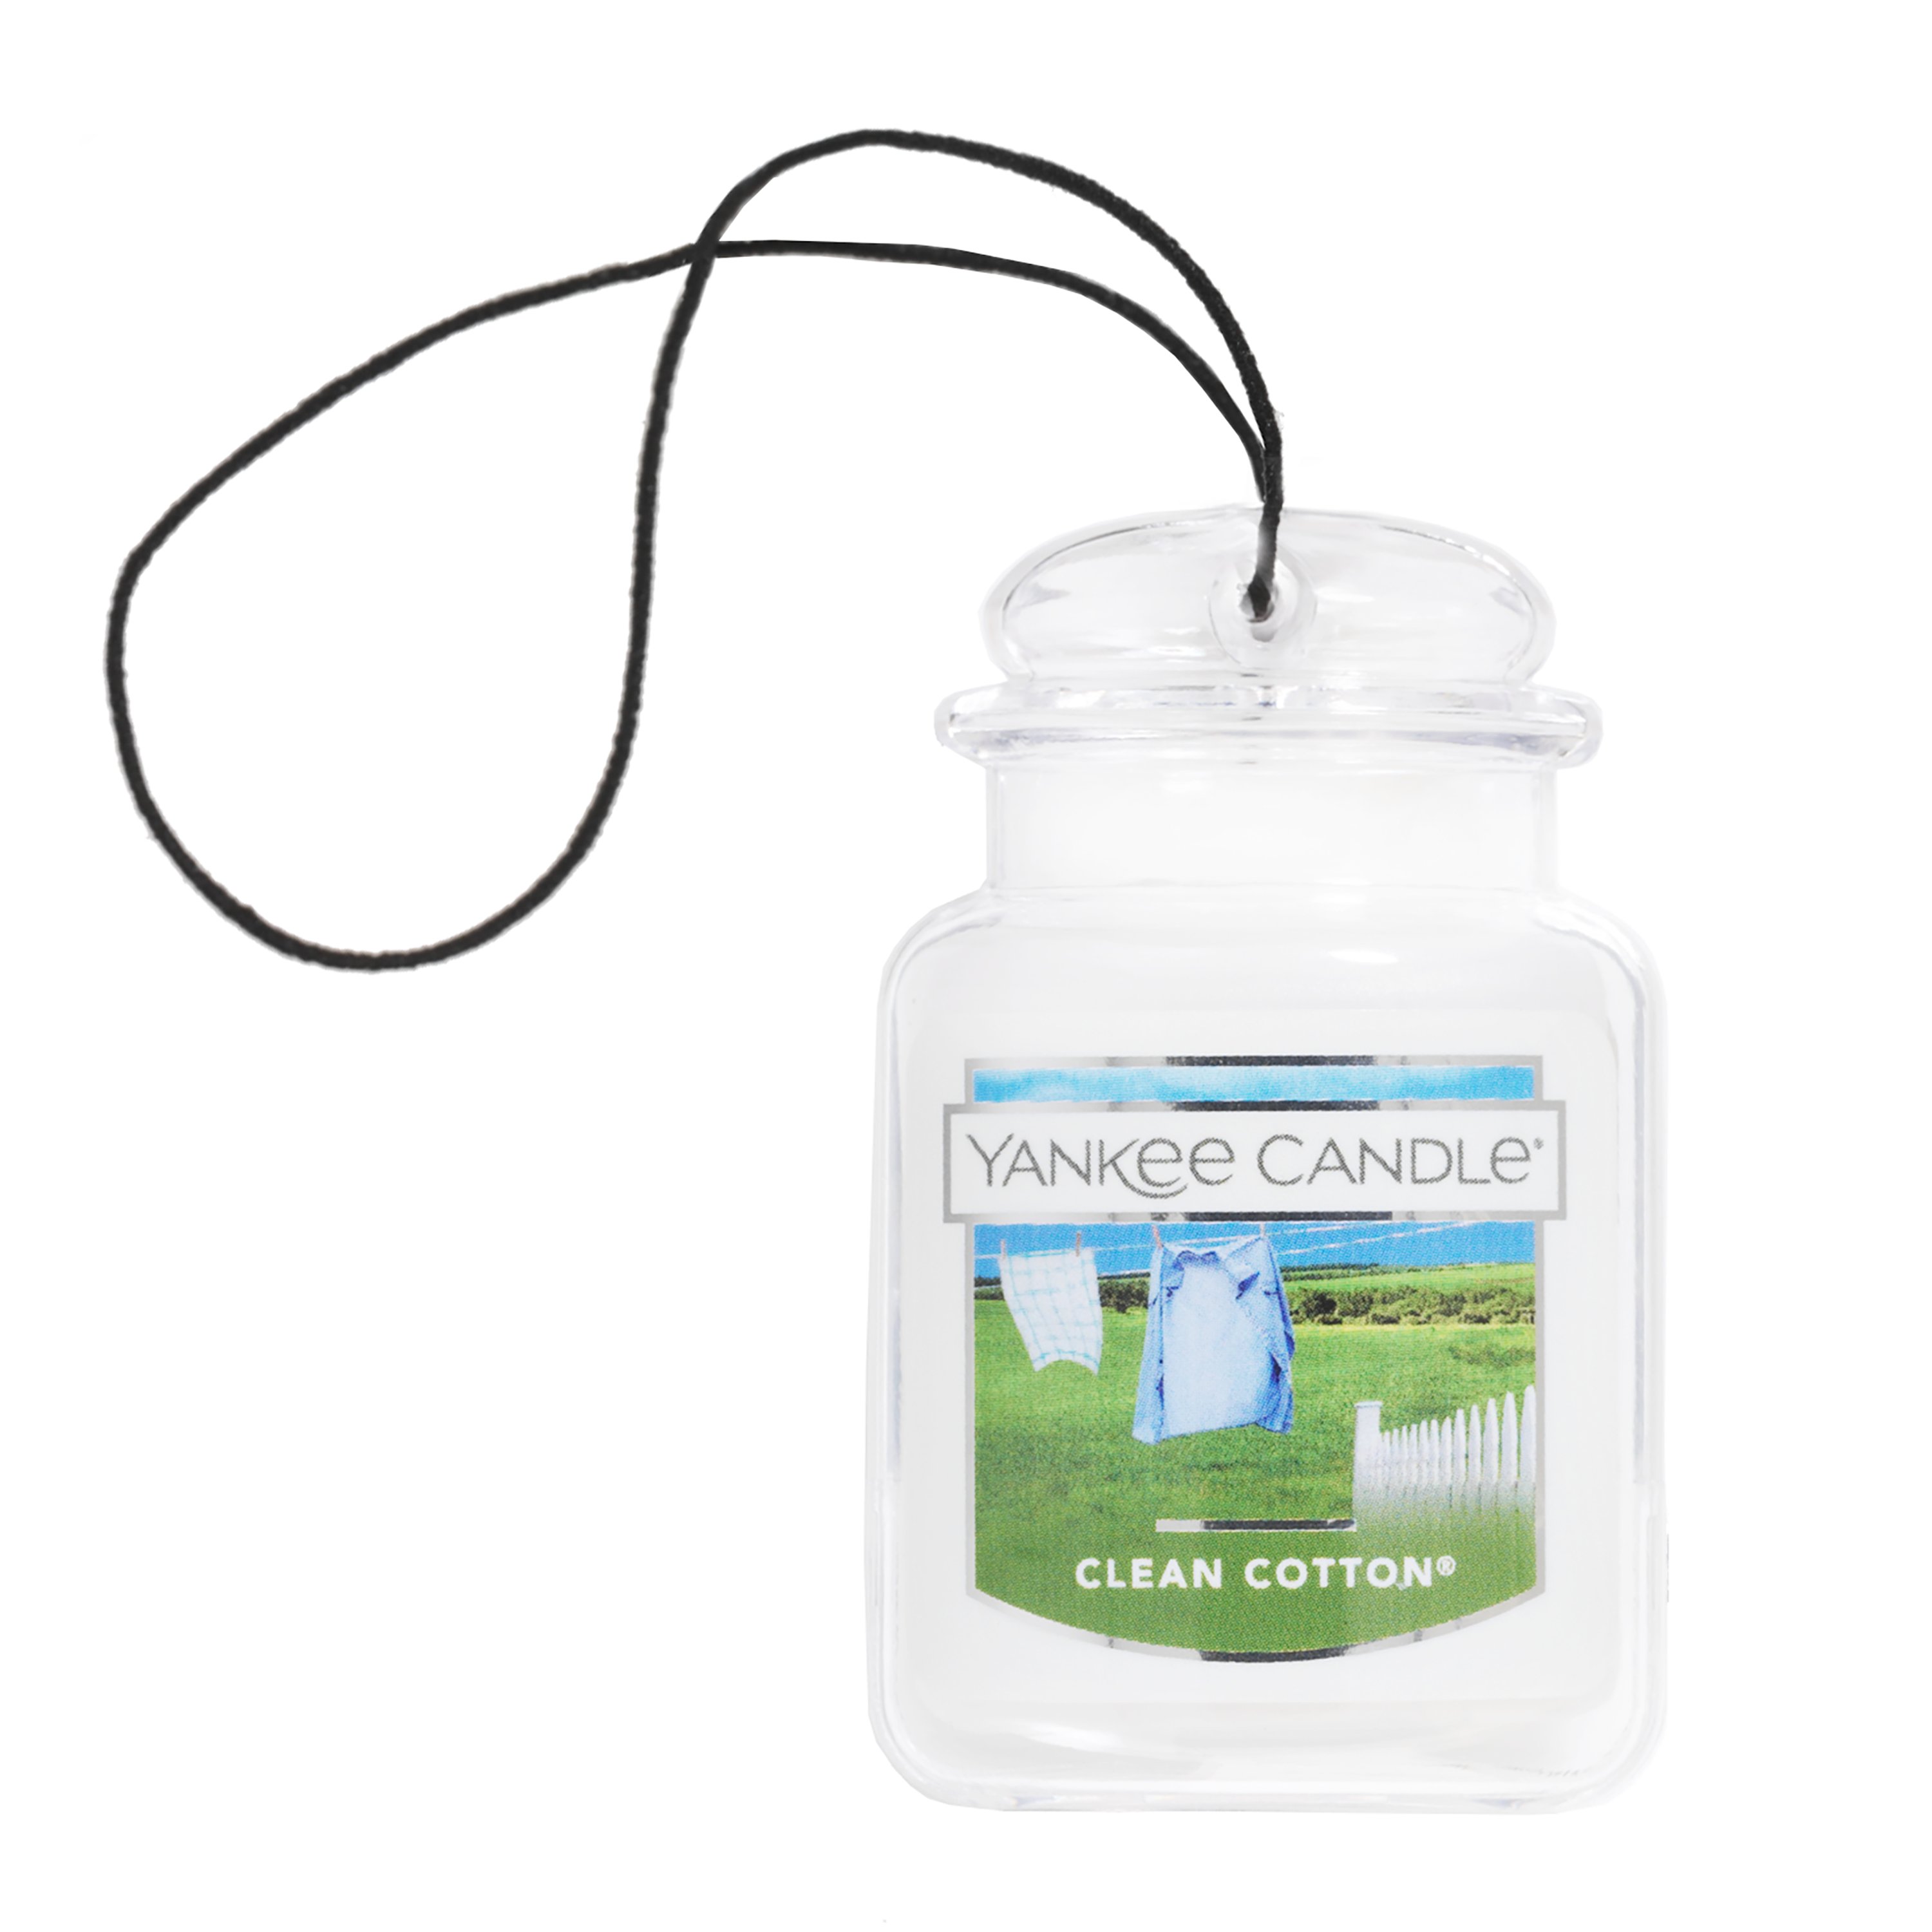 Yankee Candle Clean Cotton Car Jar Ultimate Air Fresheners